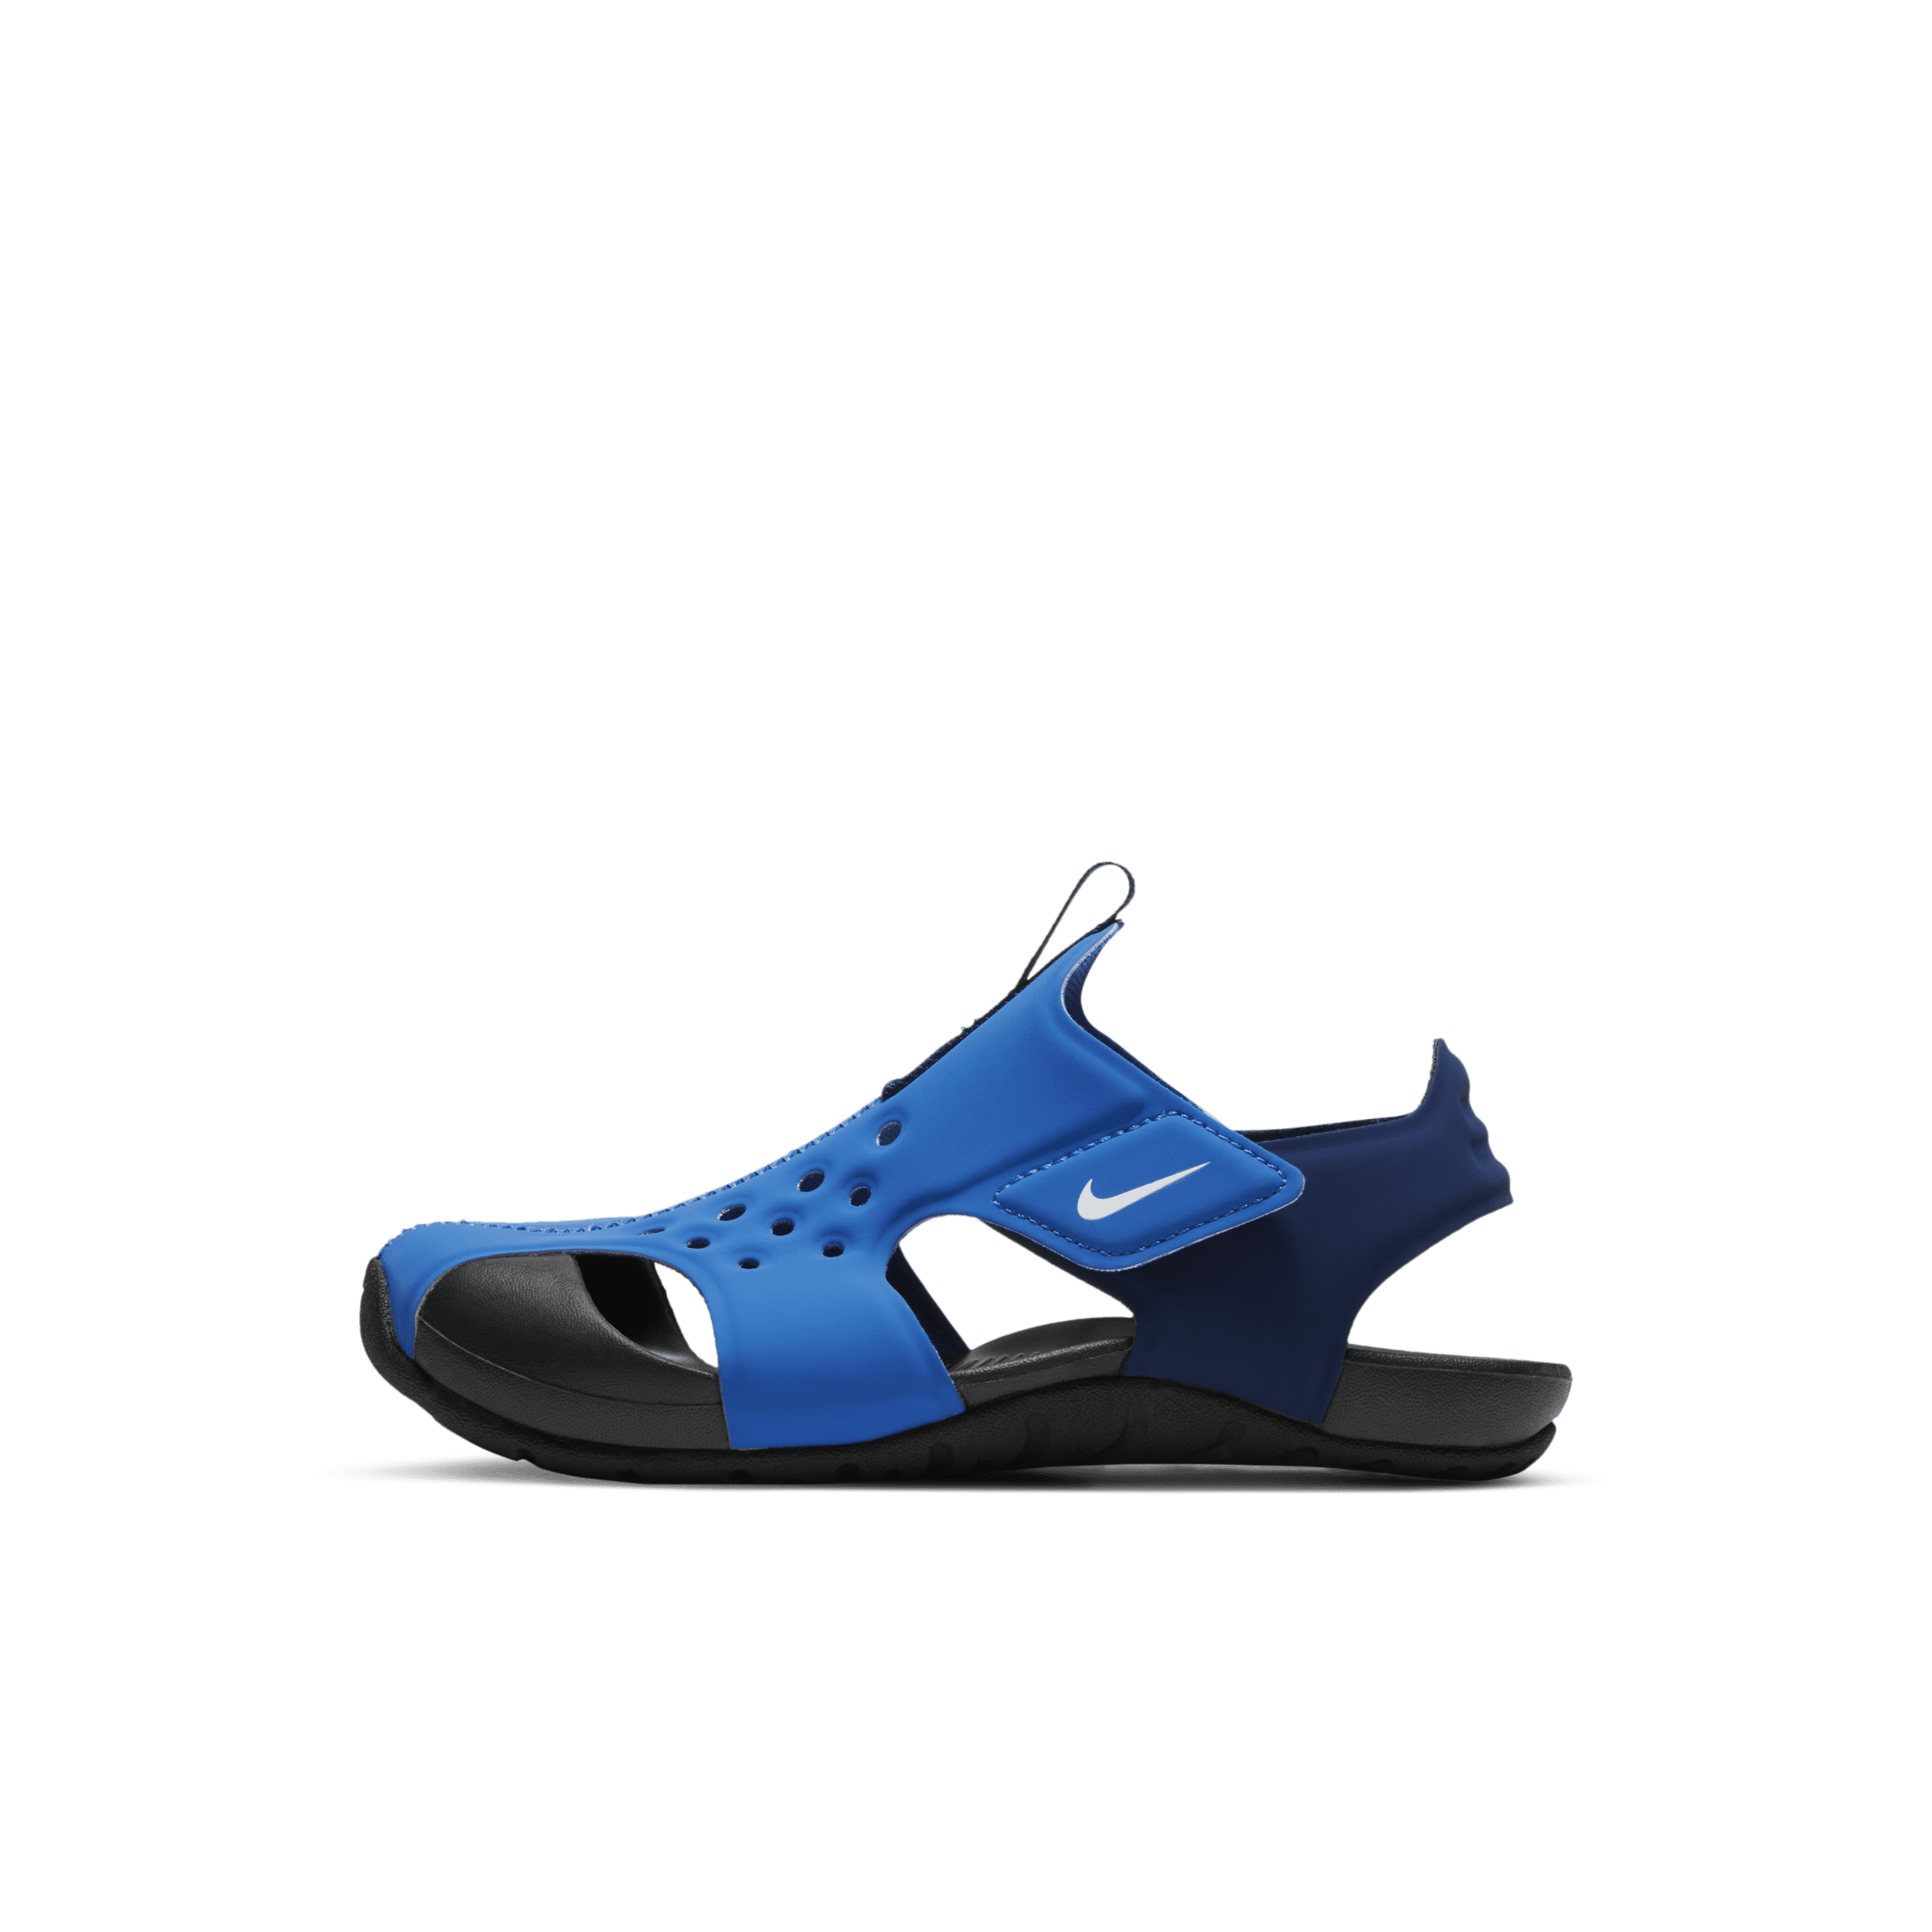 Nike Sunray Protect 2 Sandalias - Niño/a pequeño/a - Azul